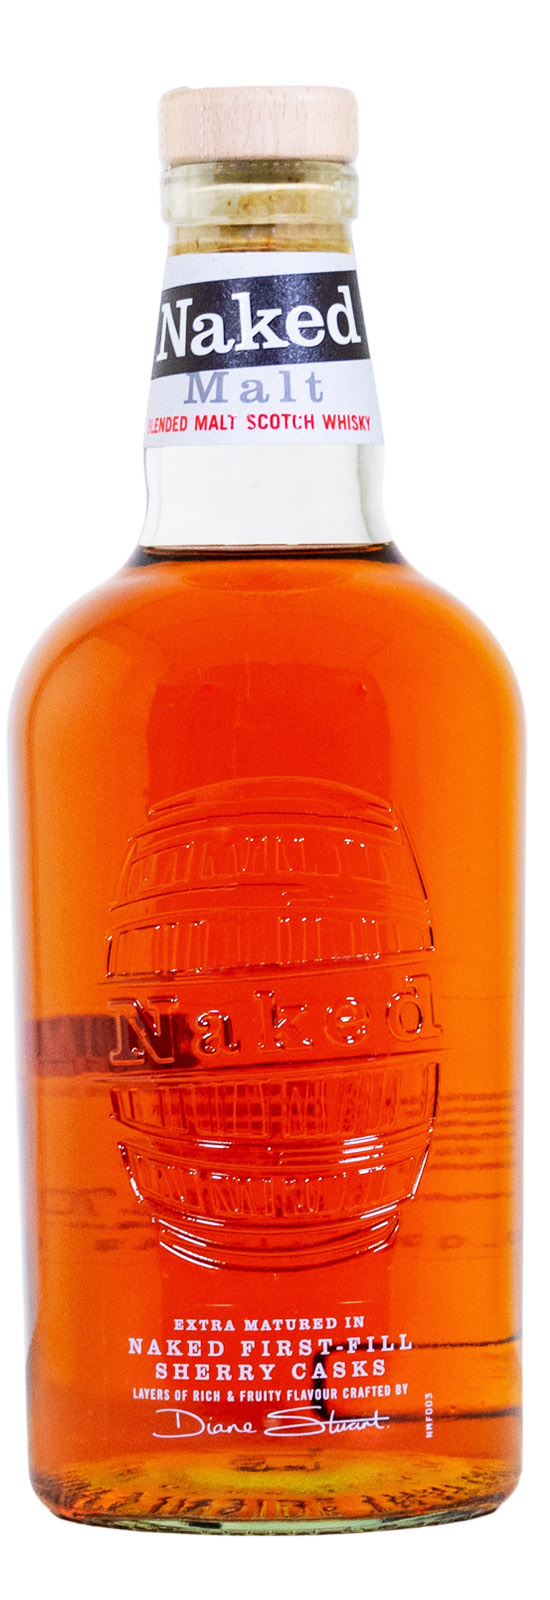 Naked Grouse Blended Malt Scotch Whisky - 0,7L 40% vol